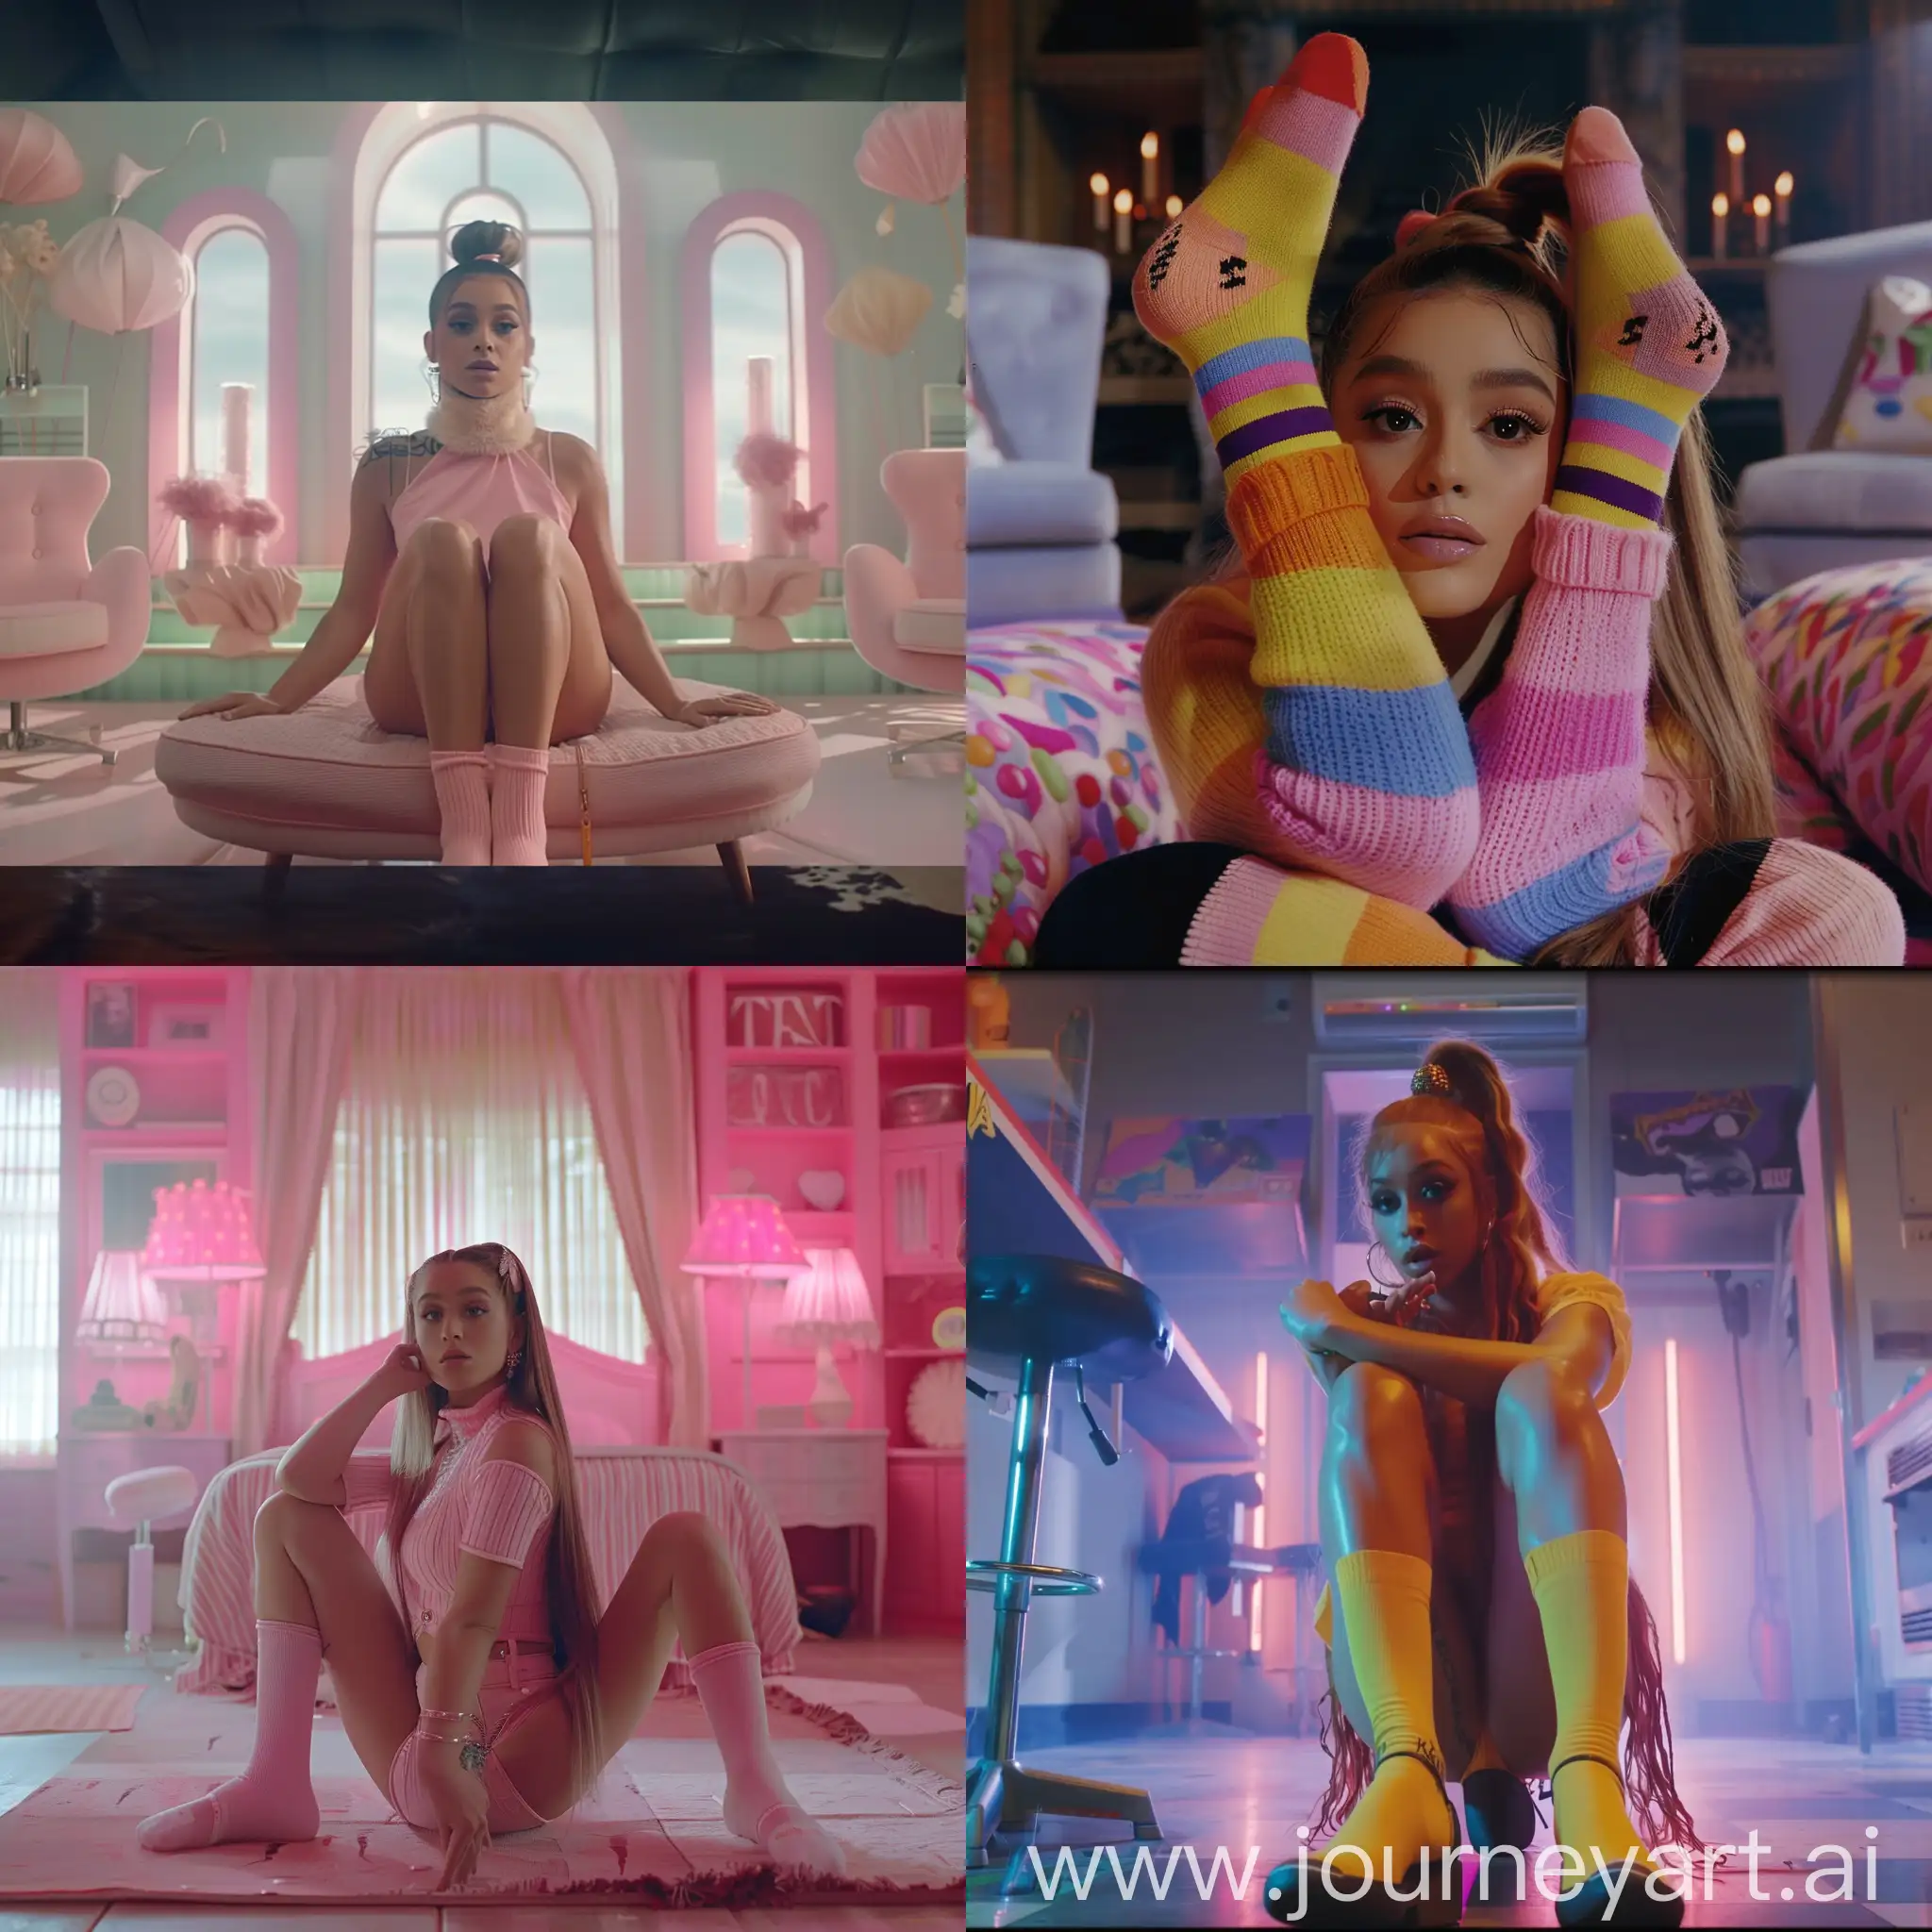 Ariana-Grande-Modeling-Socks-in-Commercial-Setting